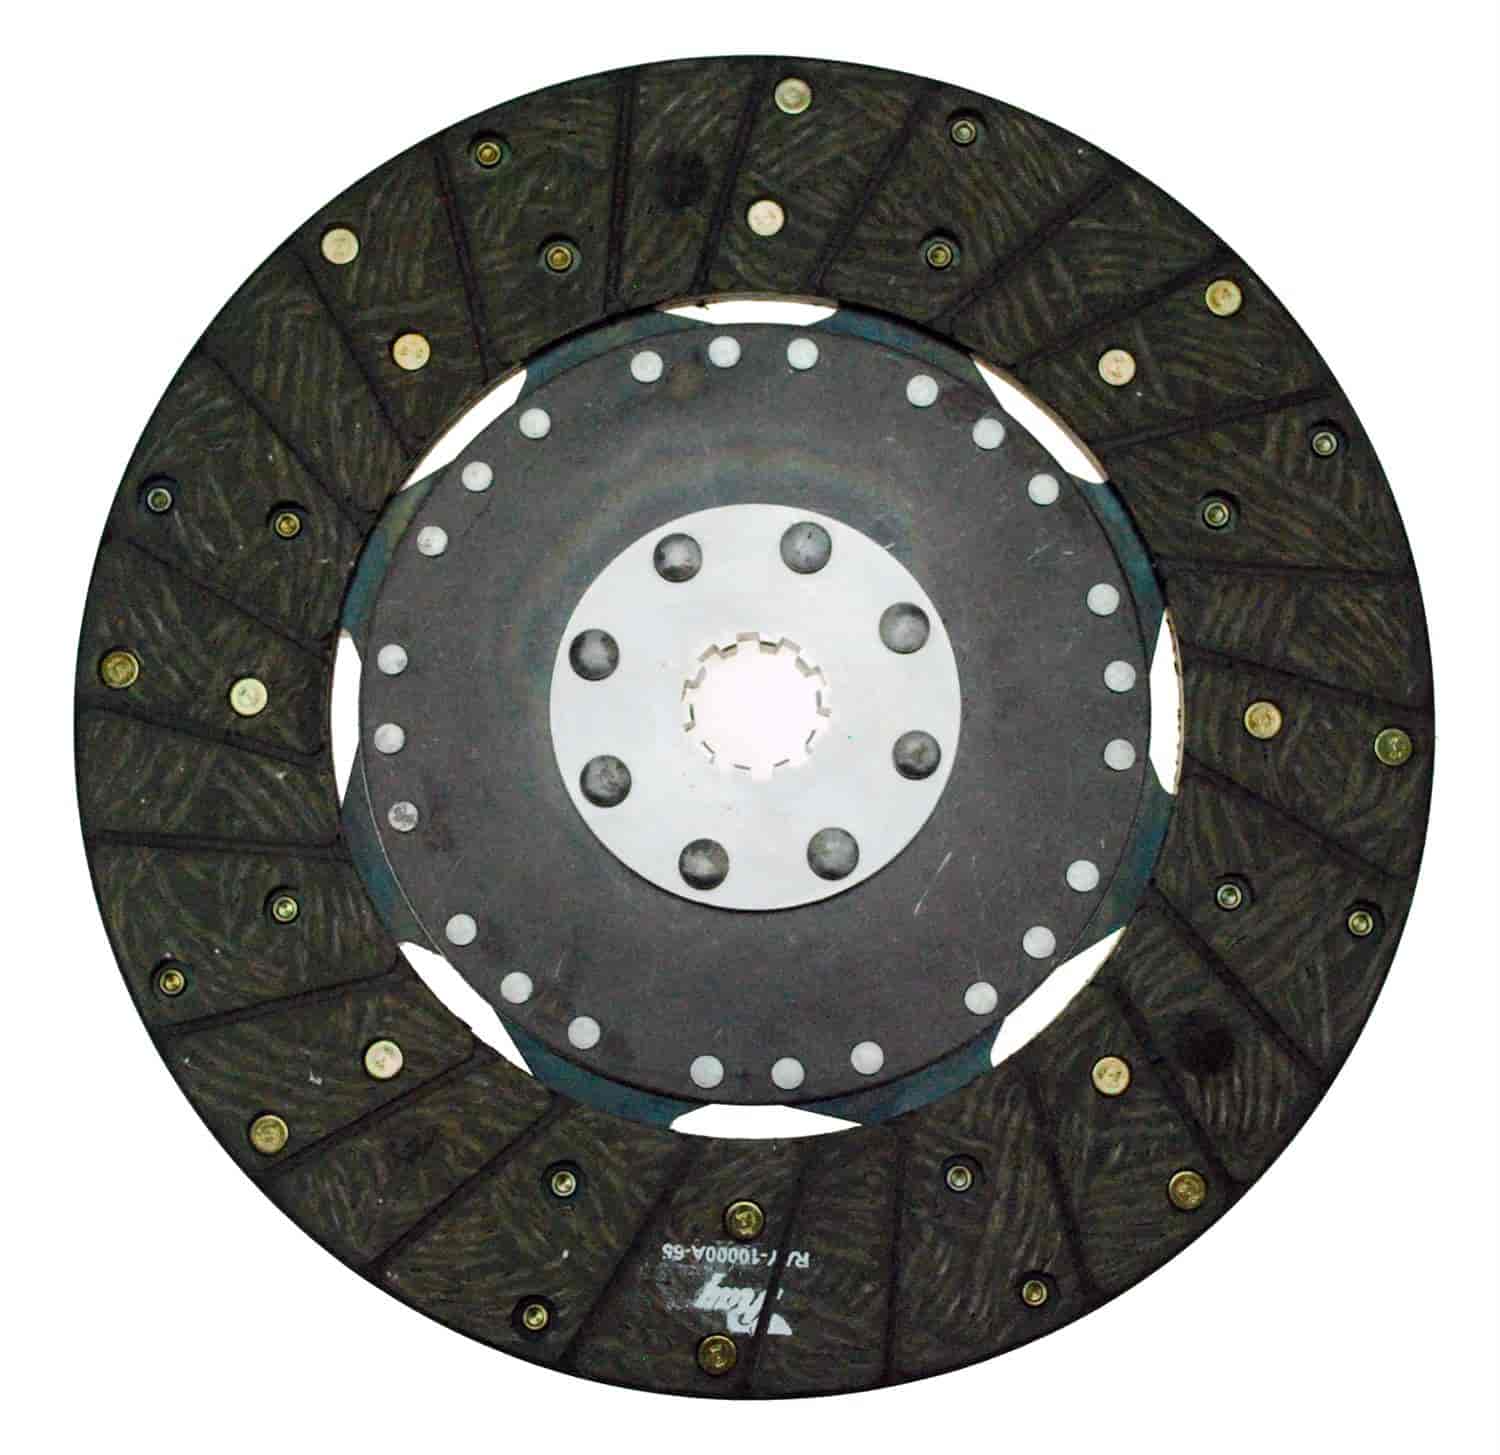 300 Series Solid Center Clutch Disc 10-1/2" Diameter